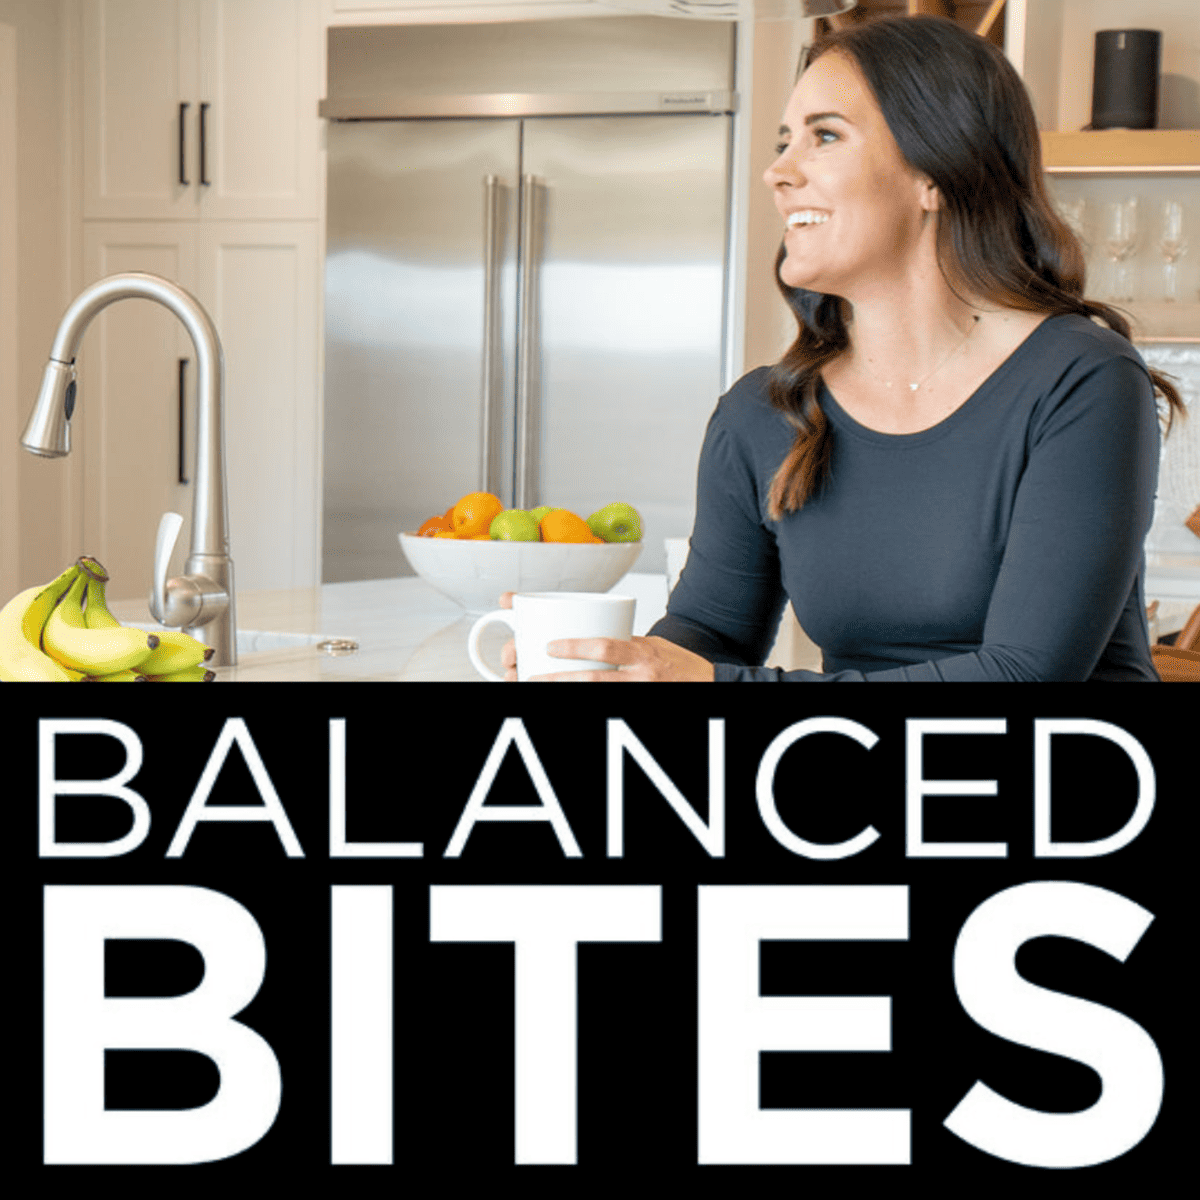 Balanced Bites Podcast